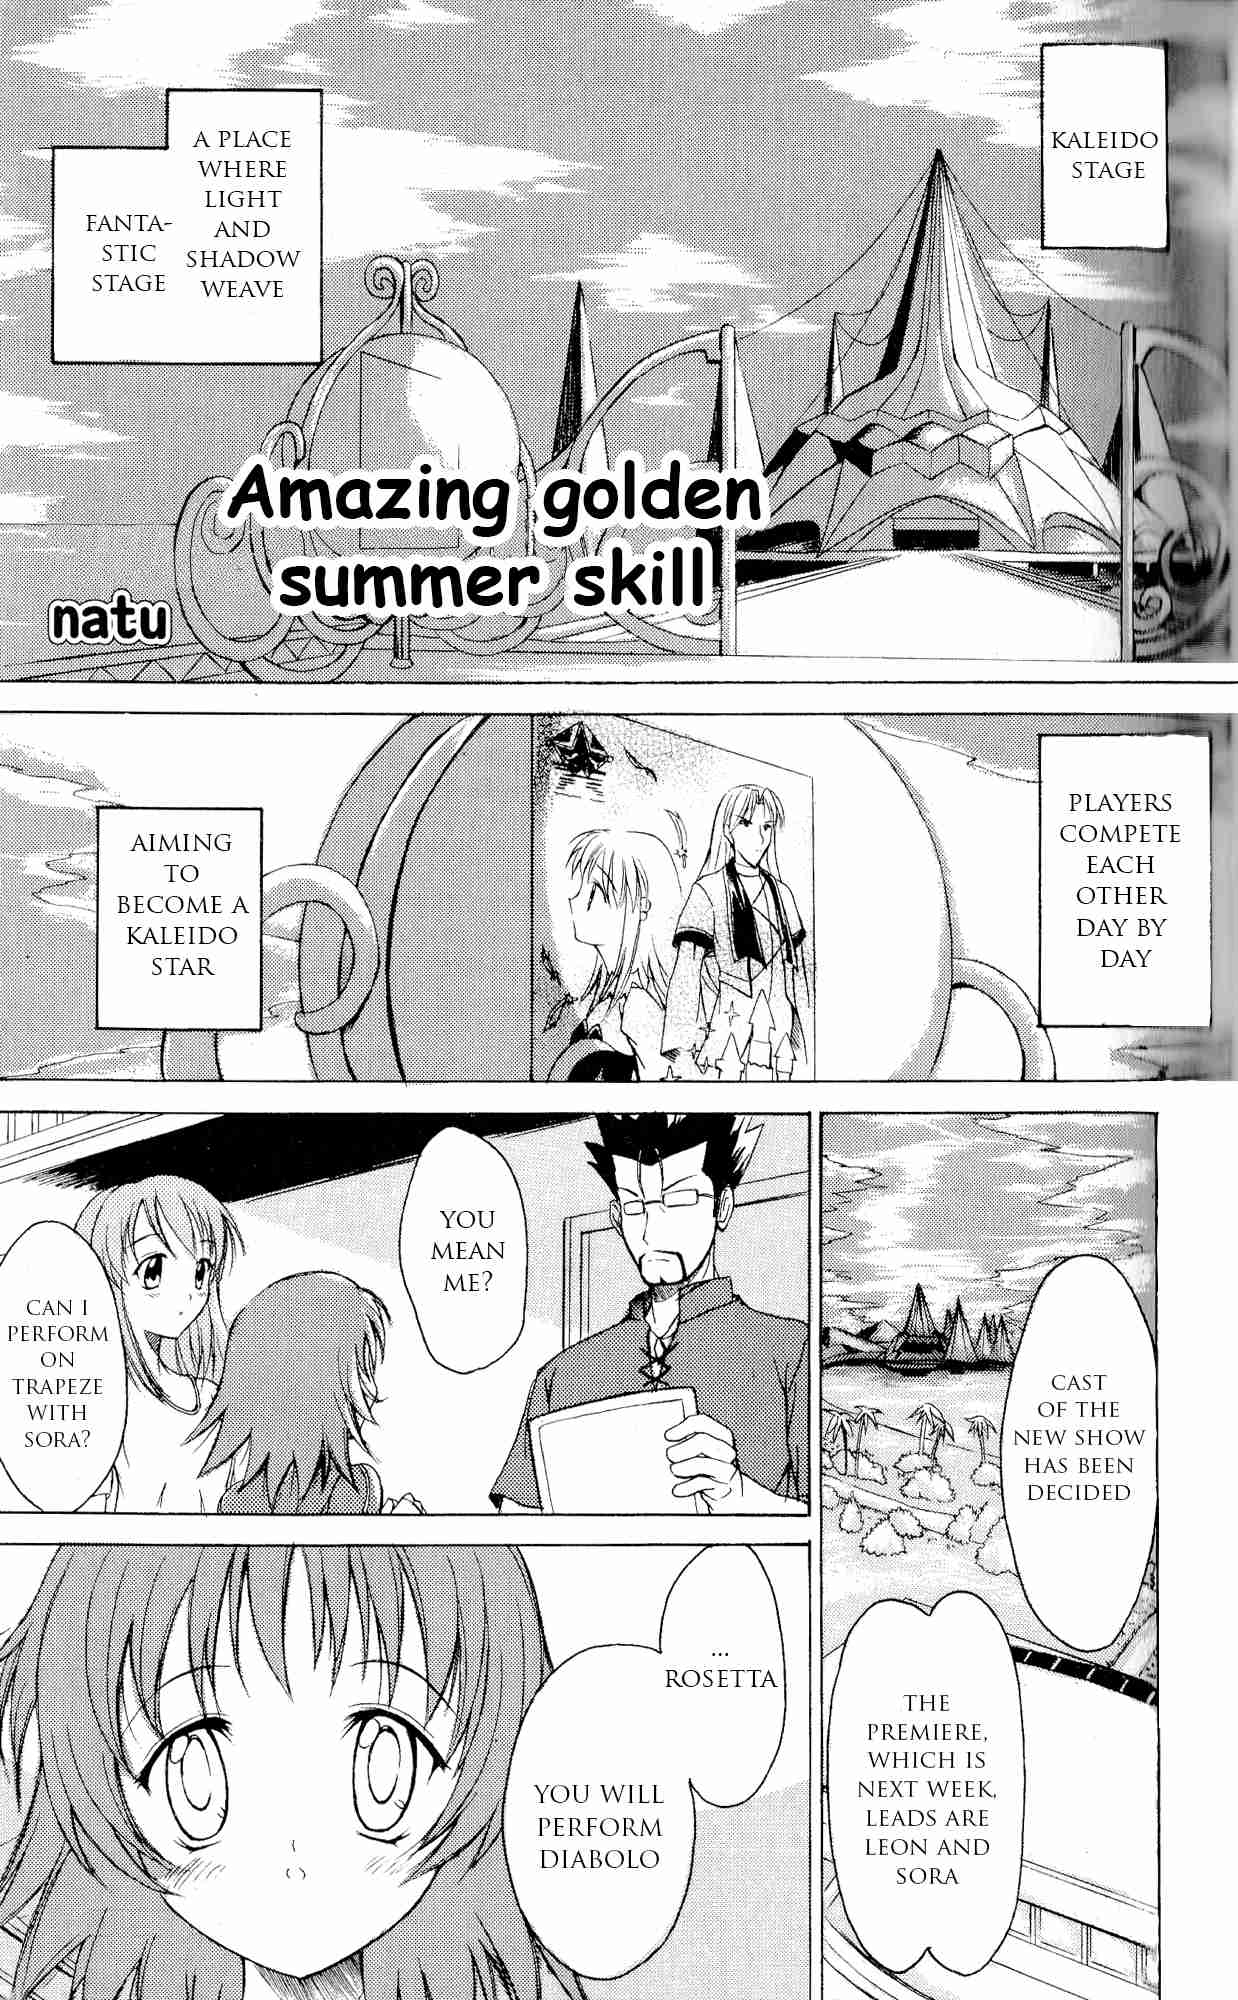 Kaleido Star Comic Anthology Vol. 1 Ch. 13 Amazing summer golden skill